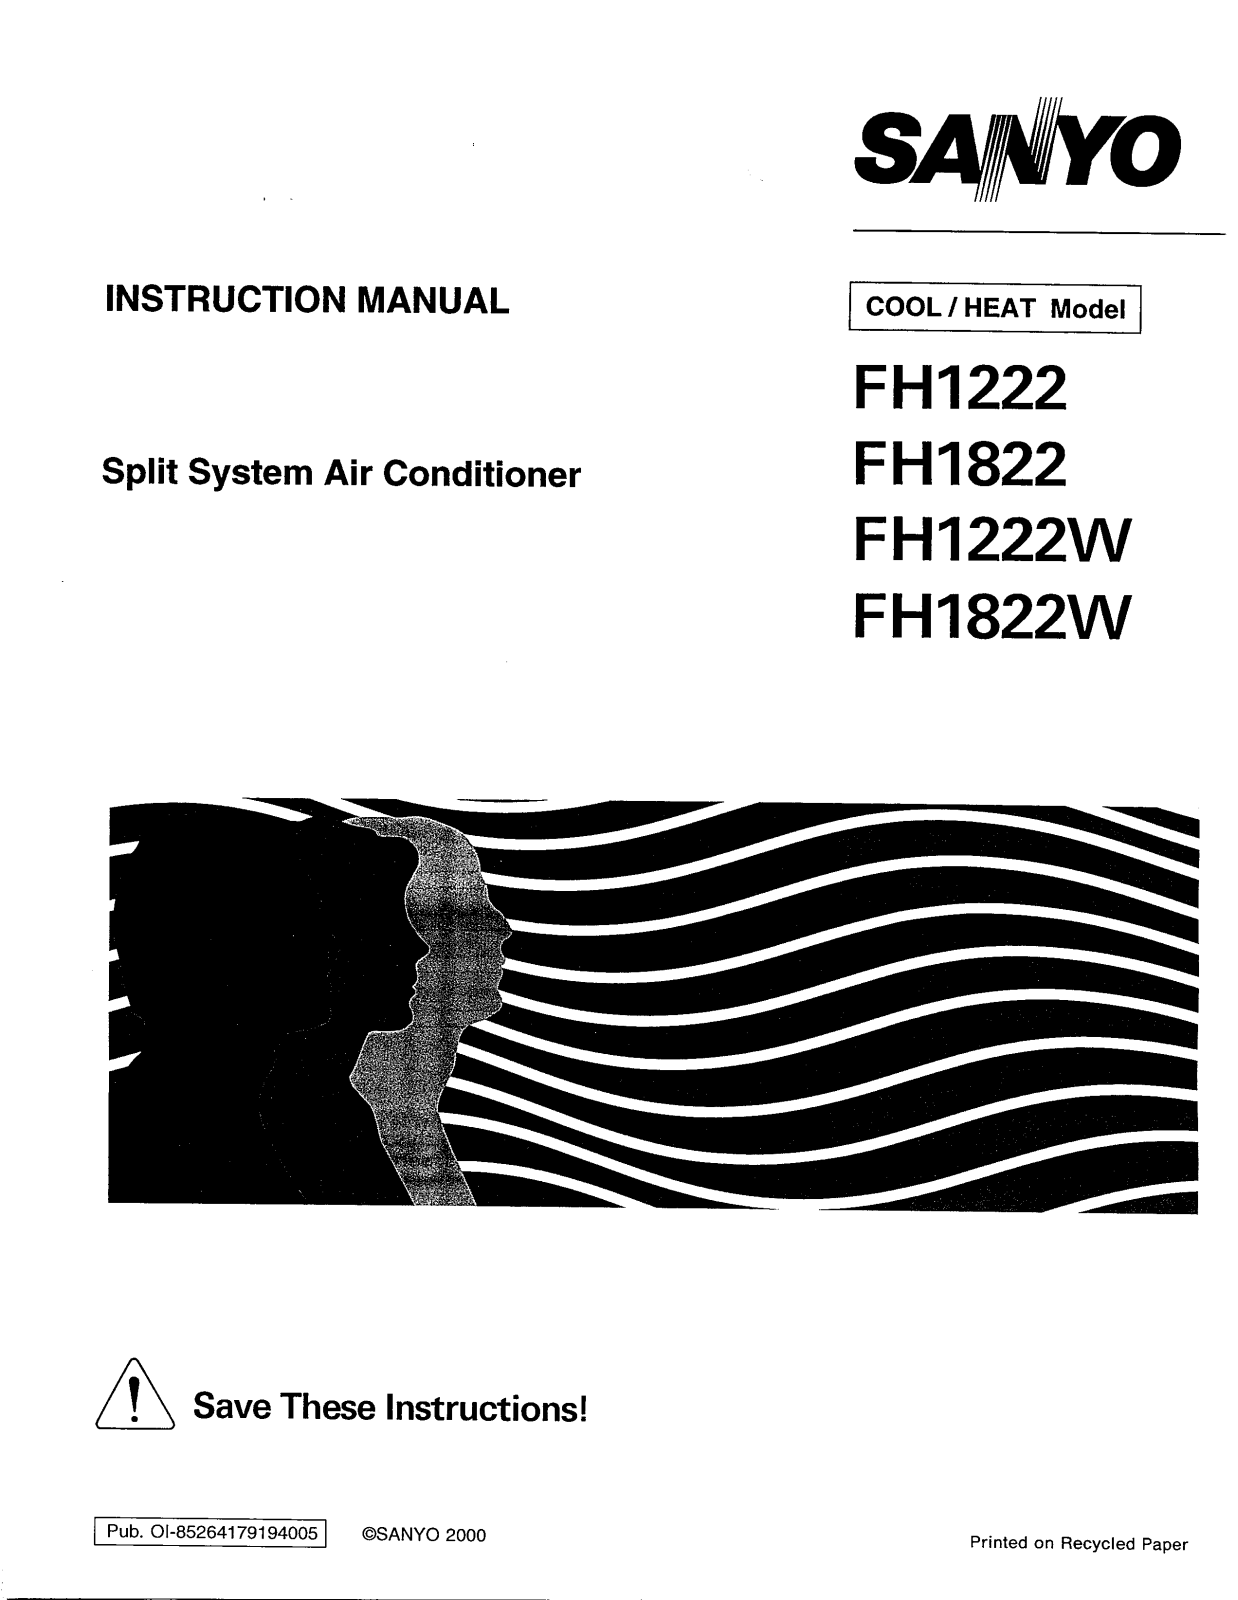 Sanyo FH1 222, FH1 822W, FH1 822, FH1 222W Service Manual